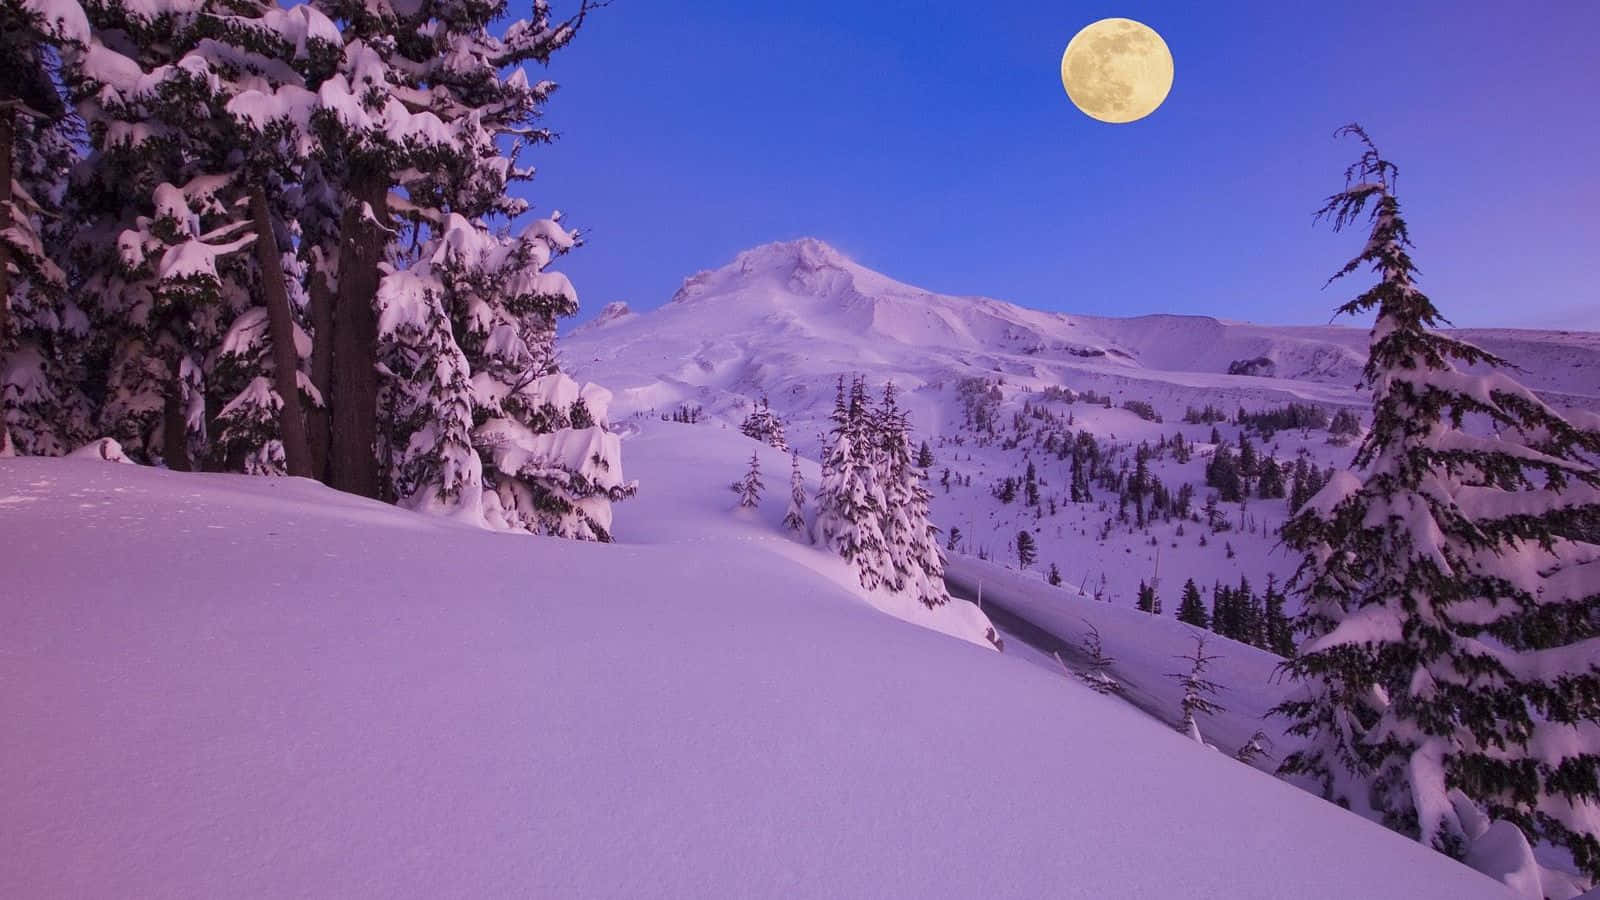 Image  Winter Wonderland -- Blanket of Fresh Snow